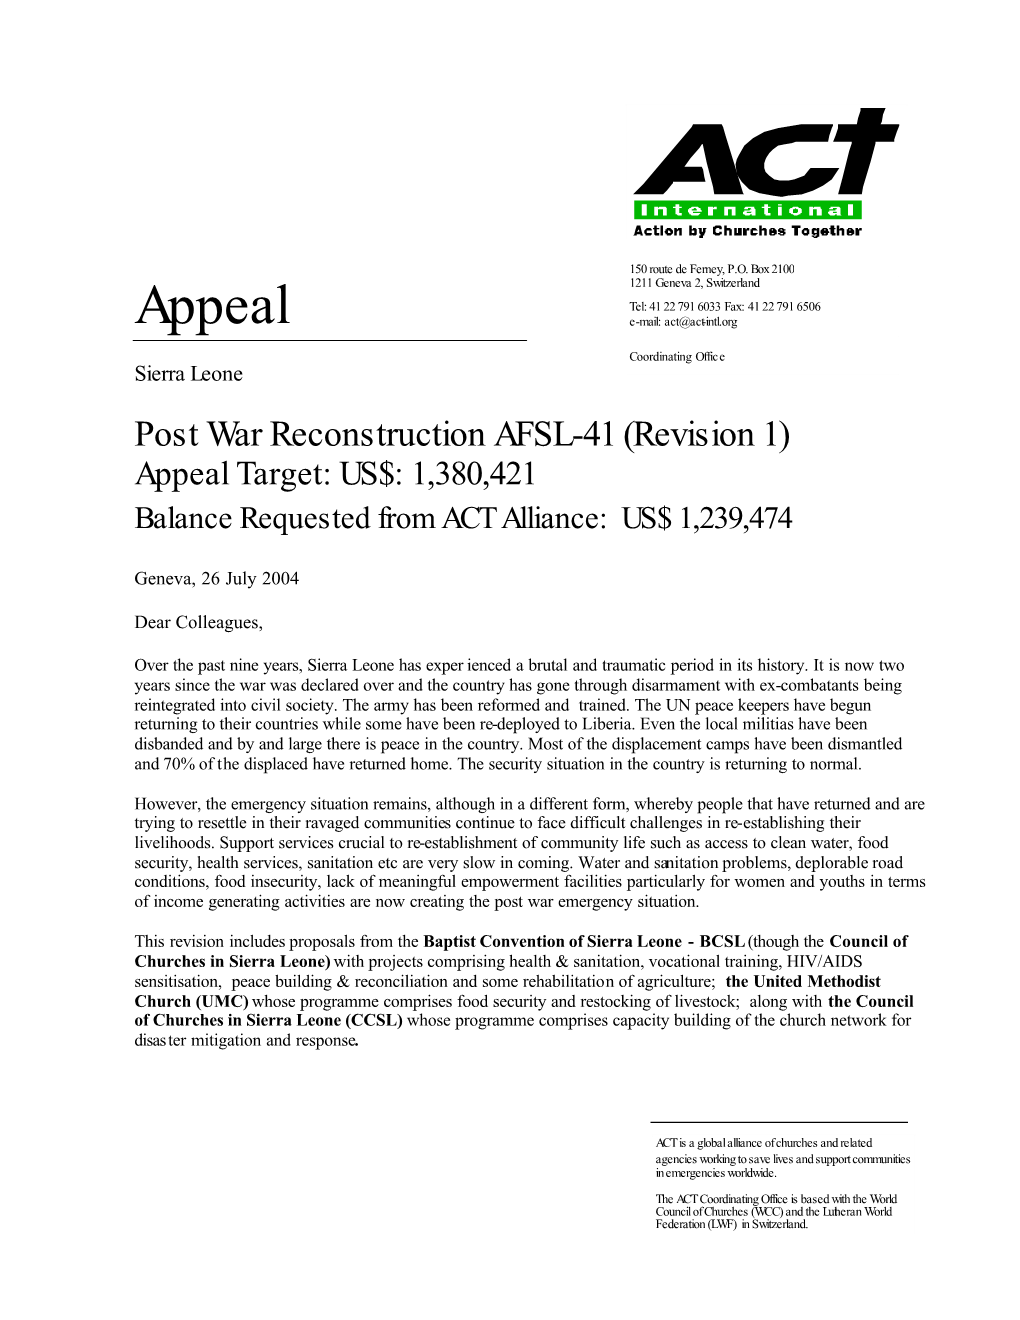 AFSL-41 Appeal Revision 1